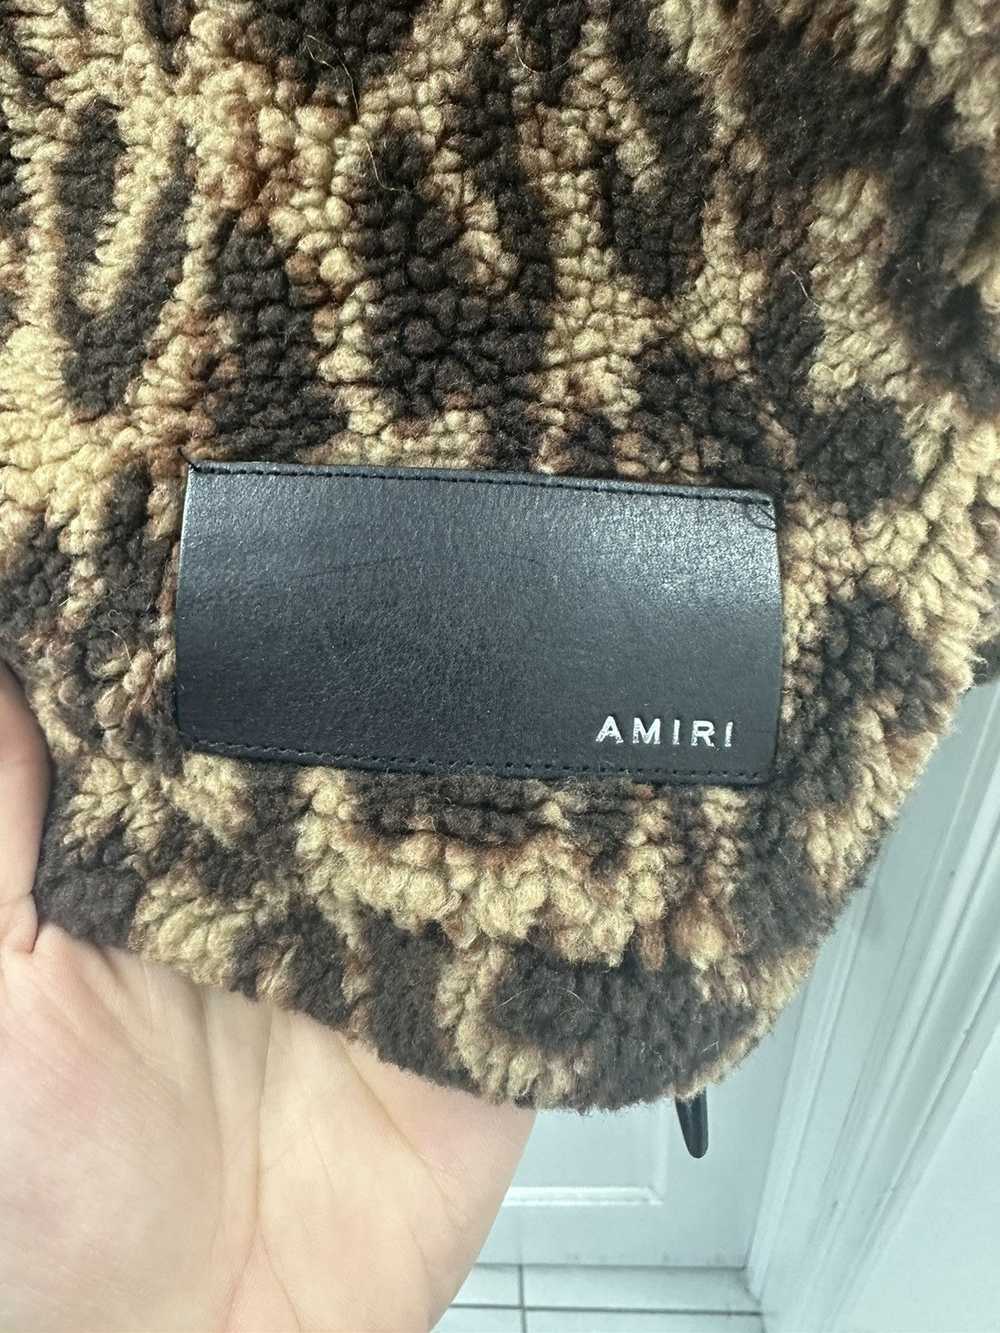 Amiri Amiri Leopard Zip Up Fleece - image 3